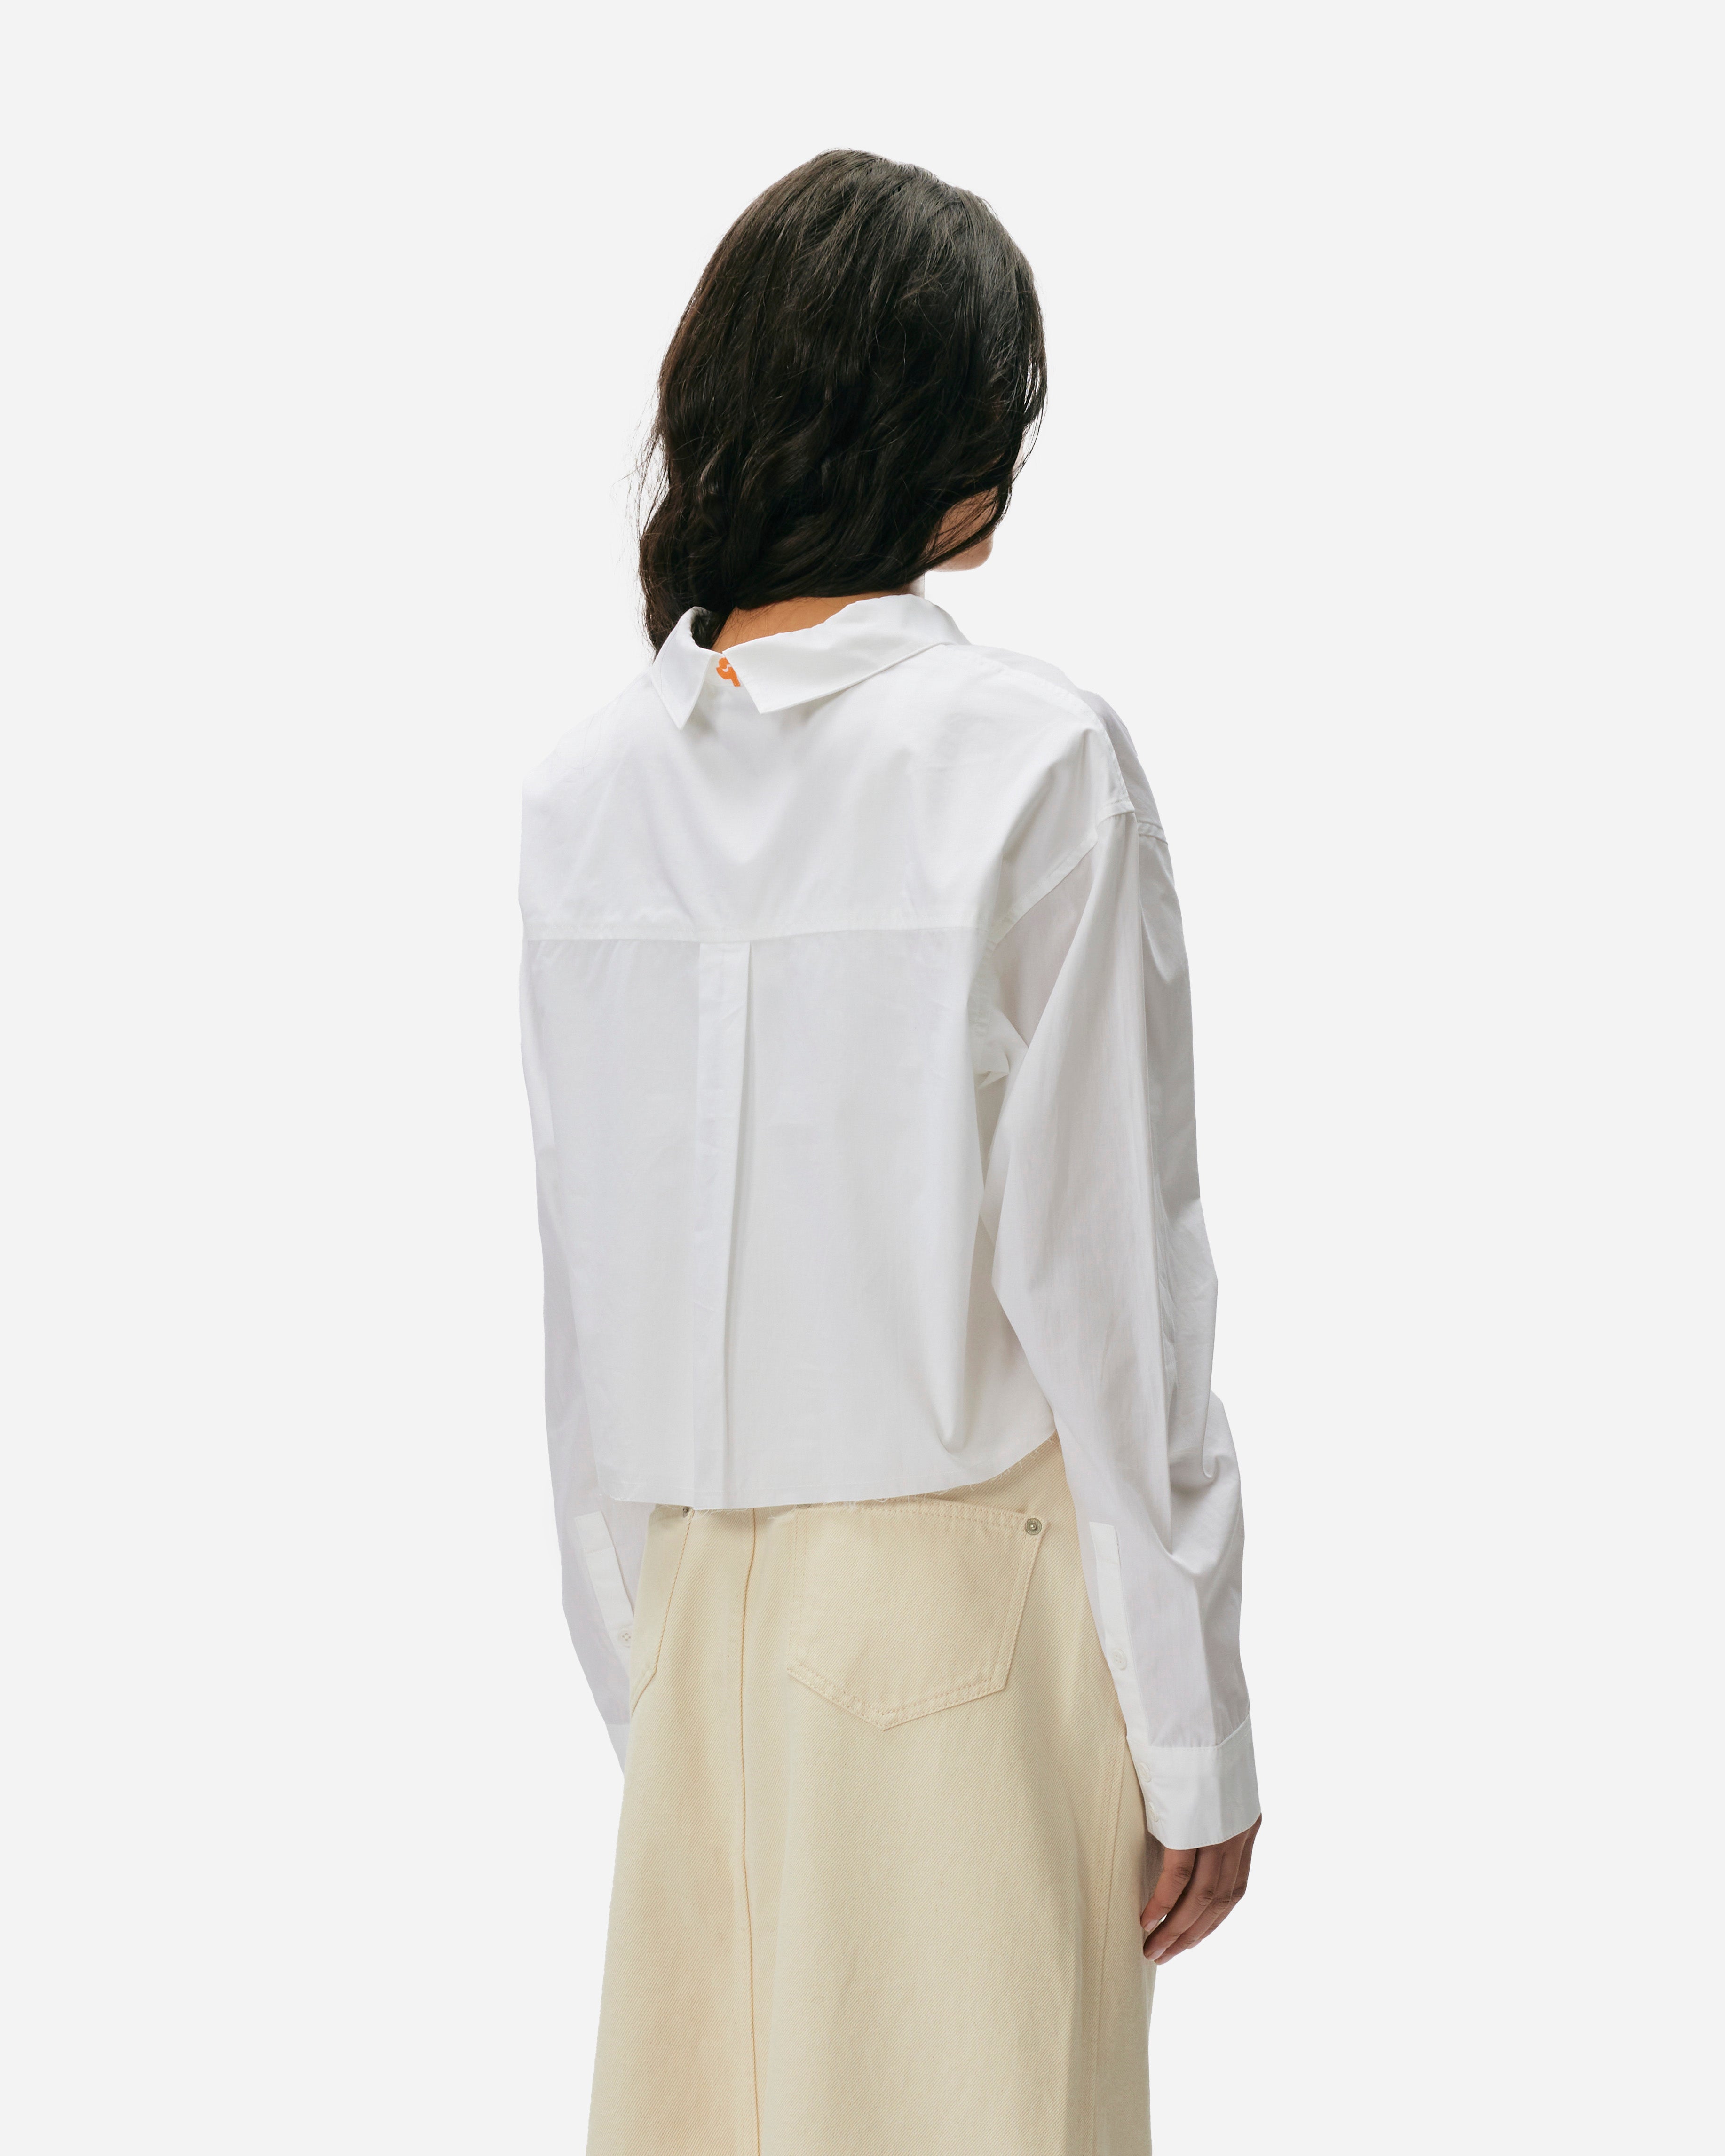 Oval Square Crisp Cropped Shirt White  20685-1001